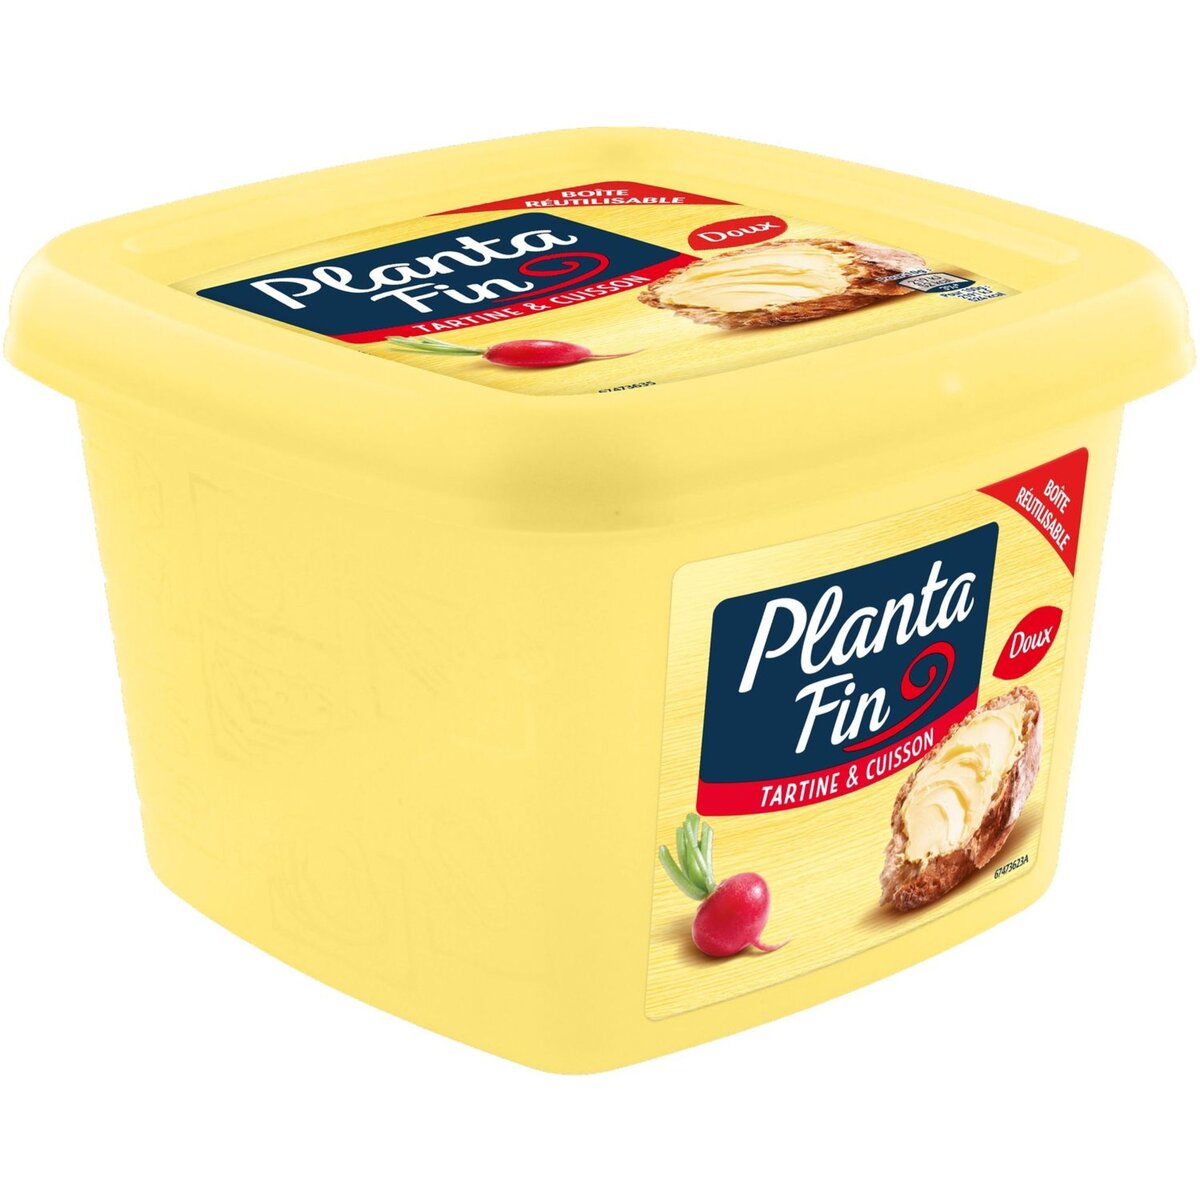 PLANTA FIN Planta fin margarine tartine & cuisson doux 1kg